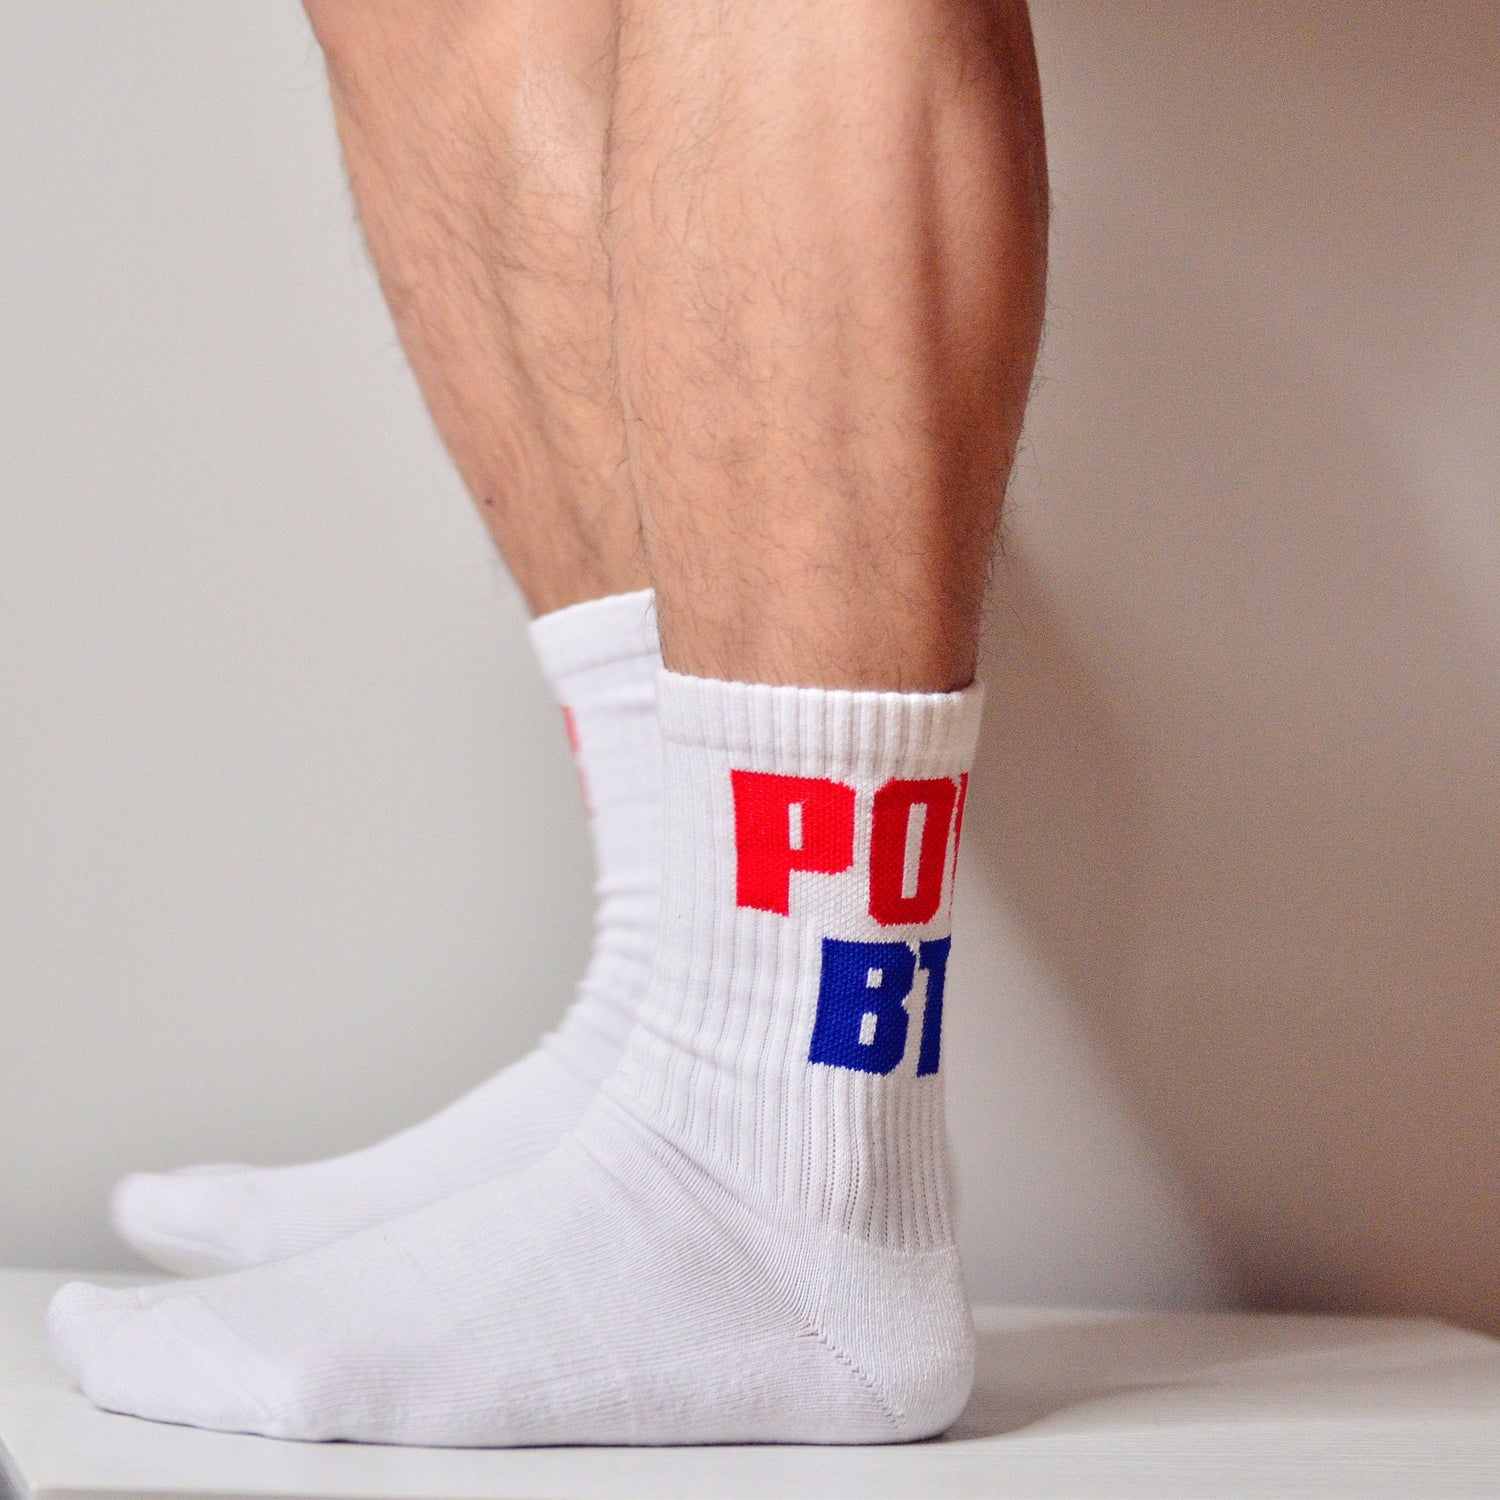 Sports socks printed - Stregactive